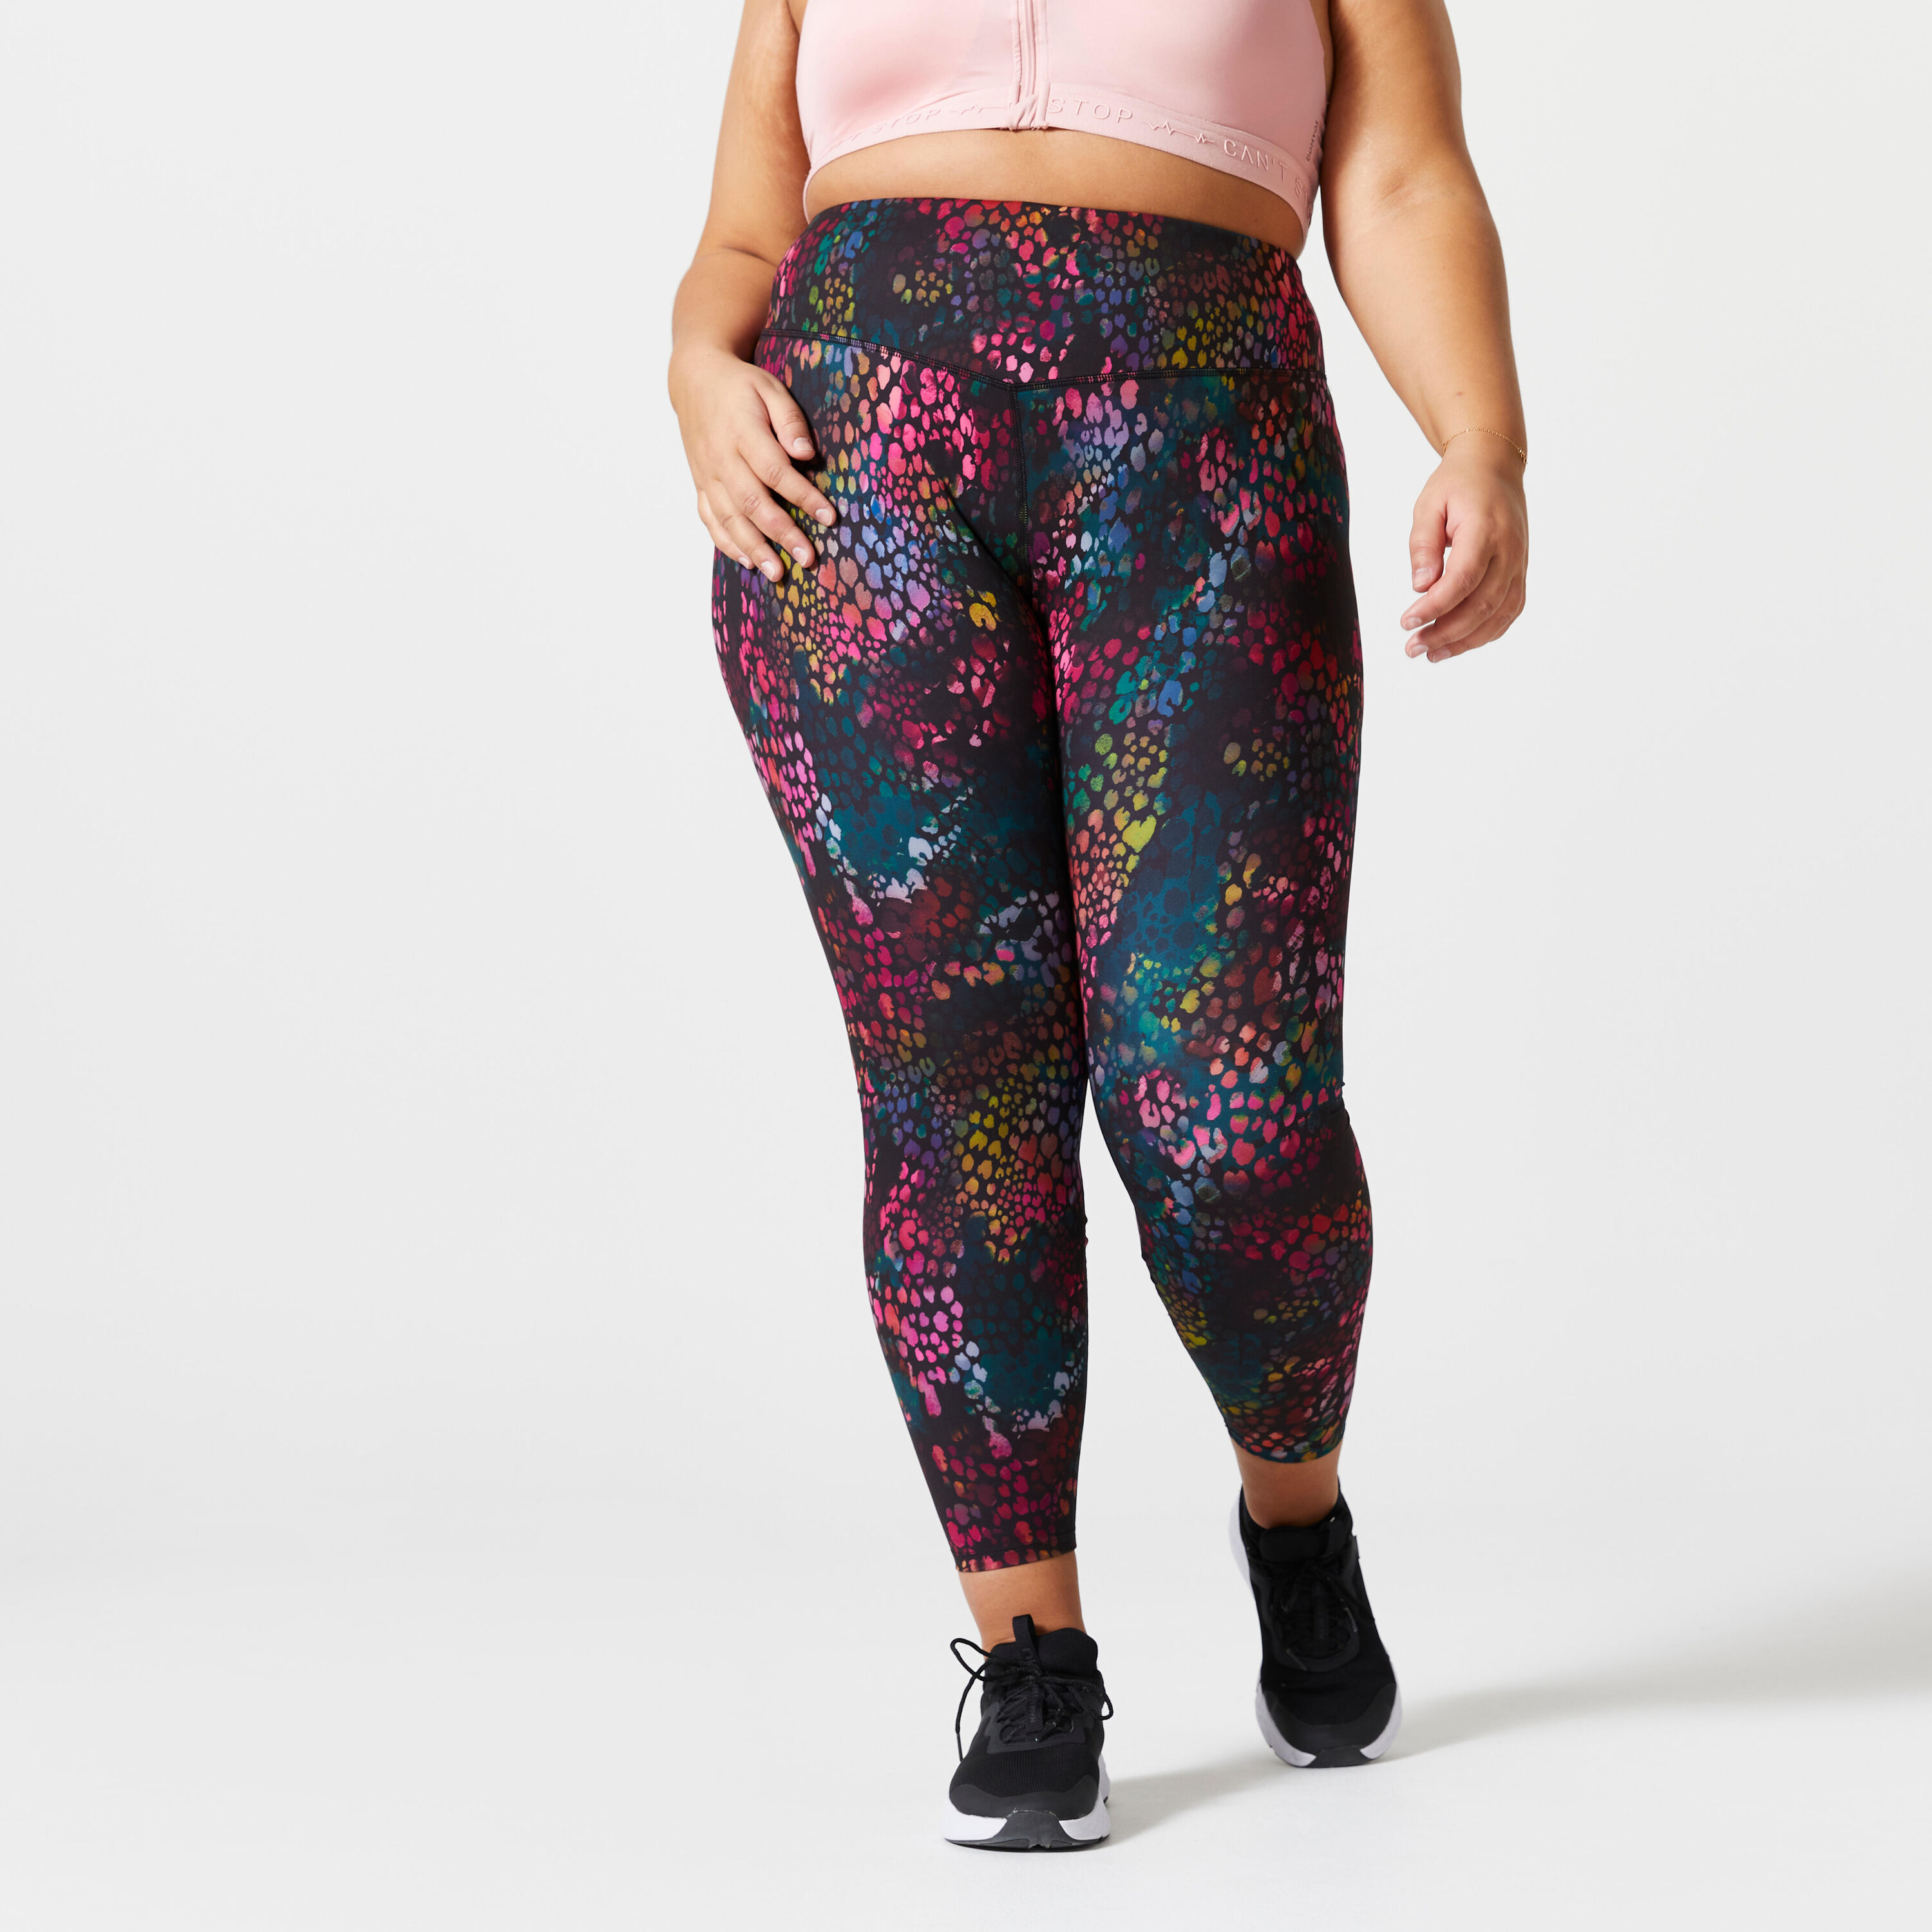 DOMYOS Women's Cardio Fitness High-Waisted Plus-Sized Leggings - Print